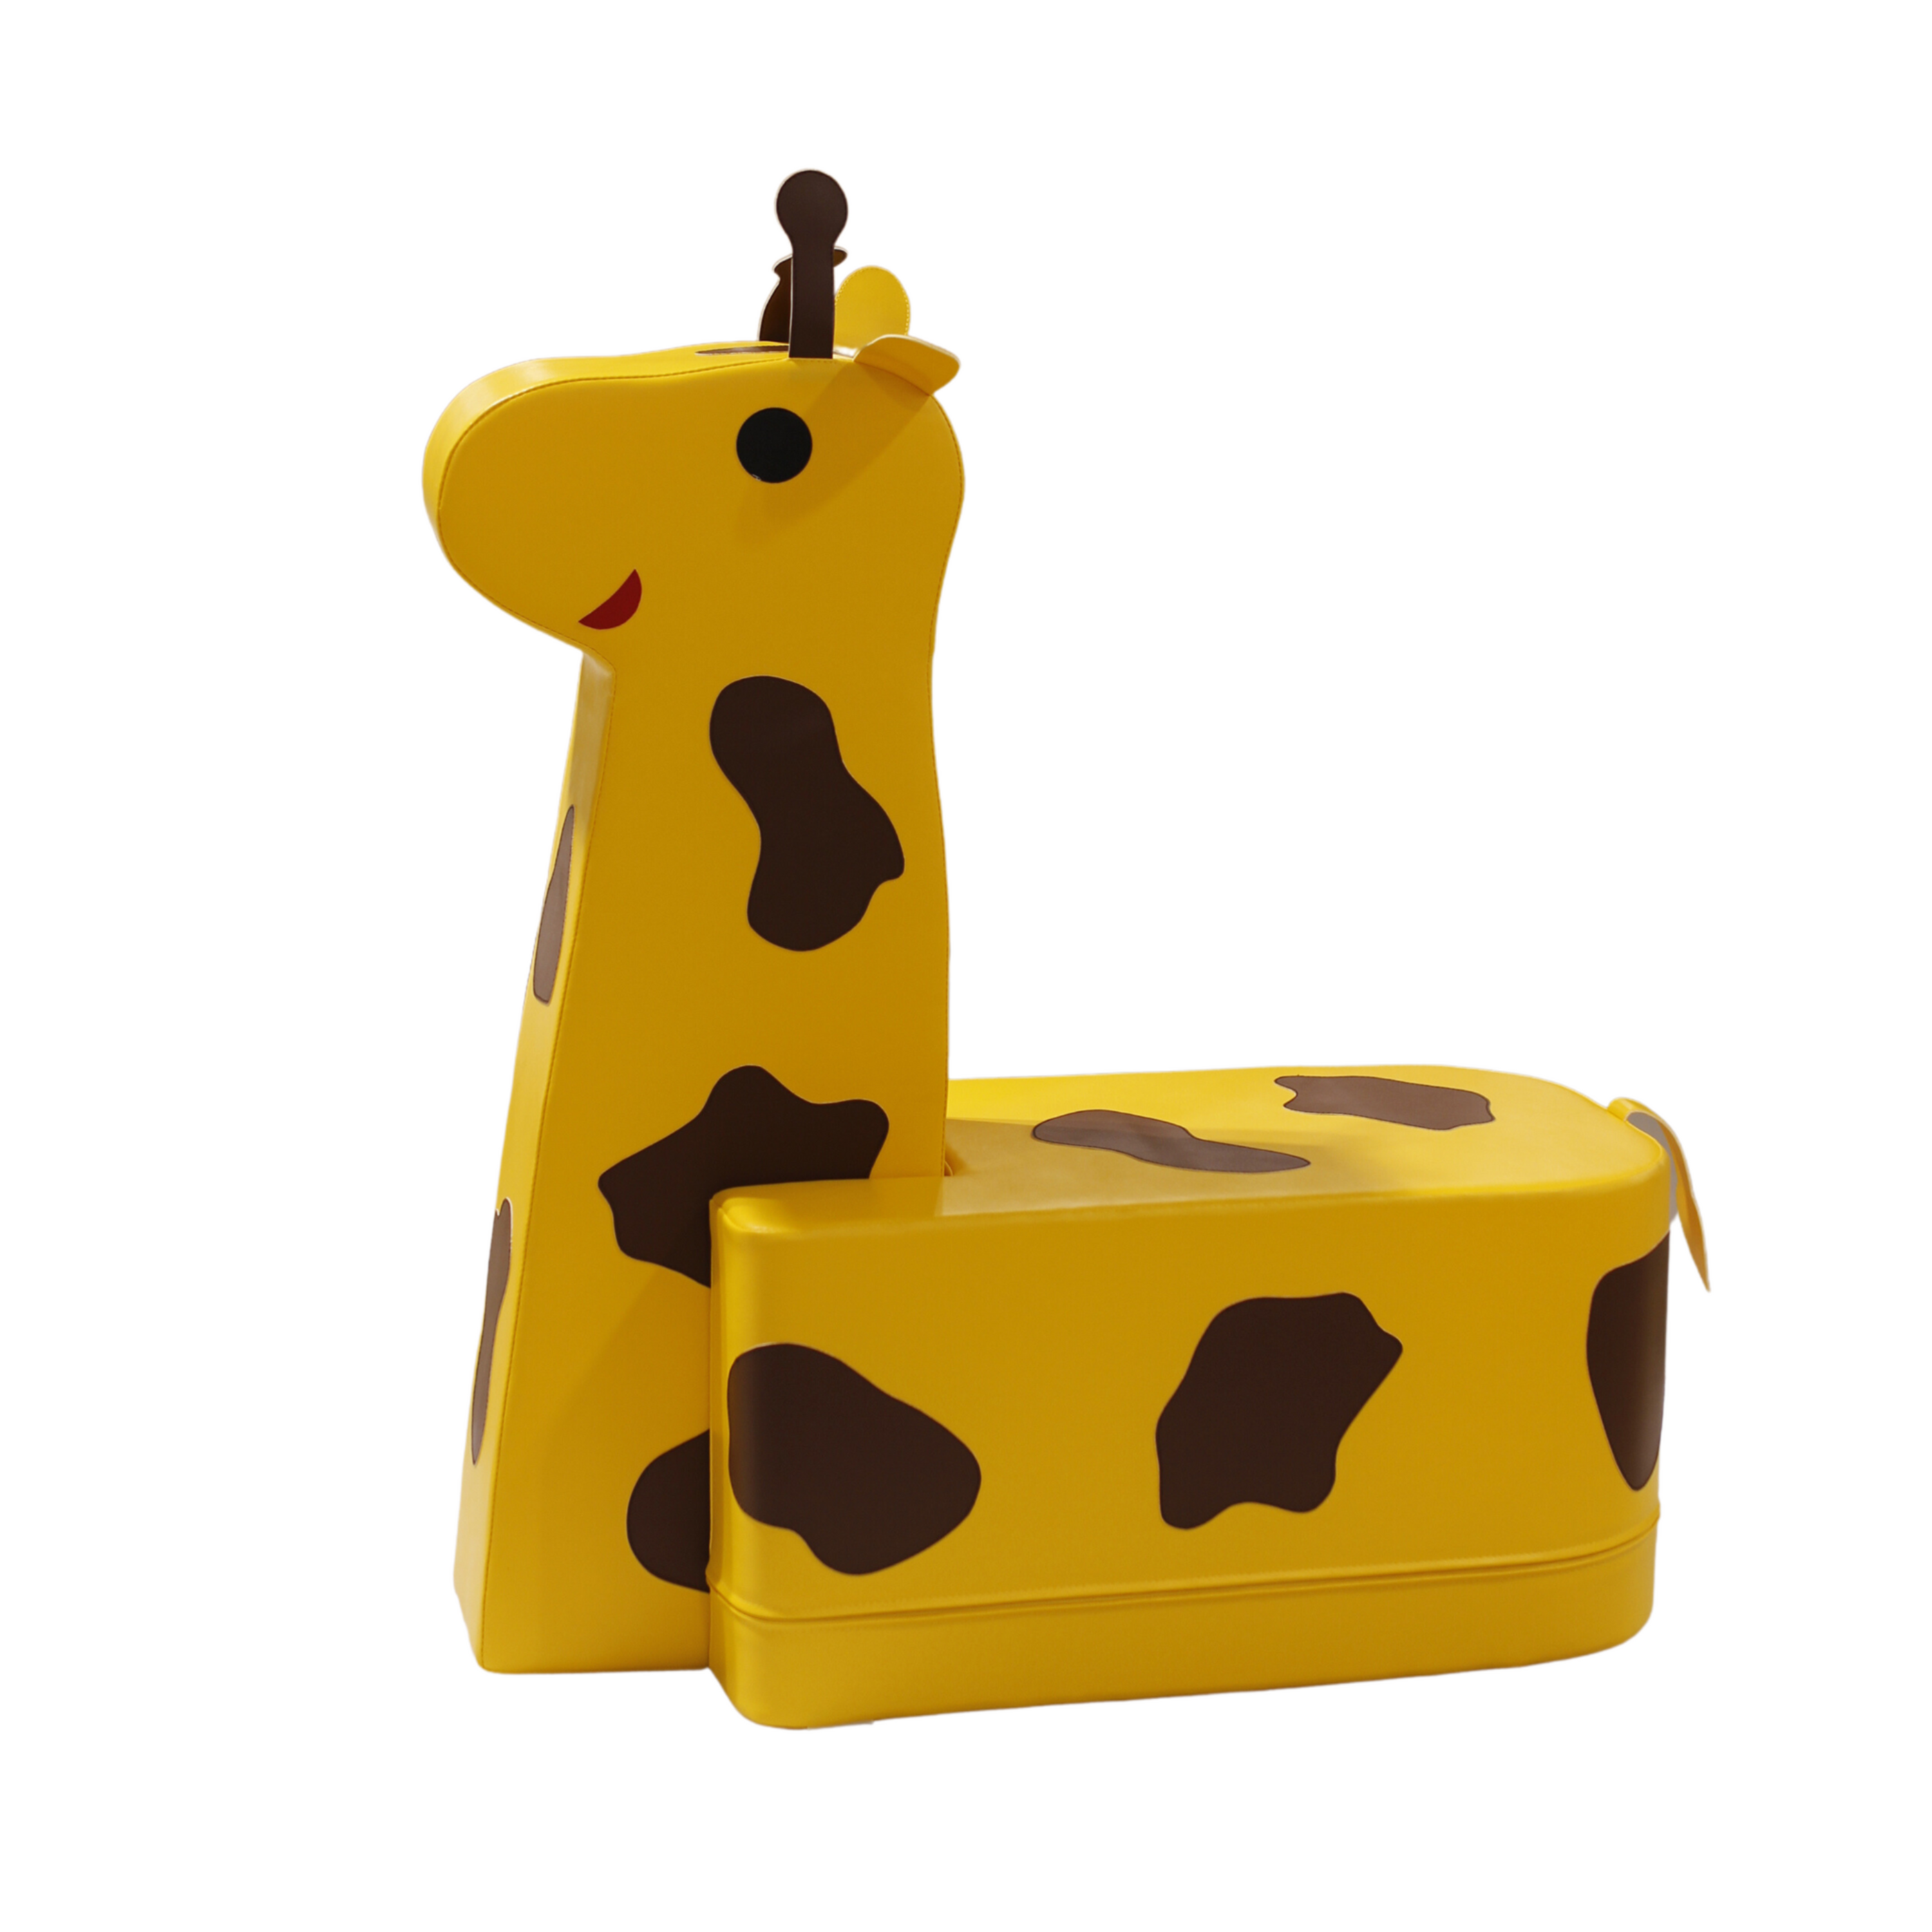 Custom giraffe soft play set from IGLU